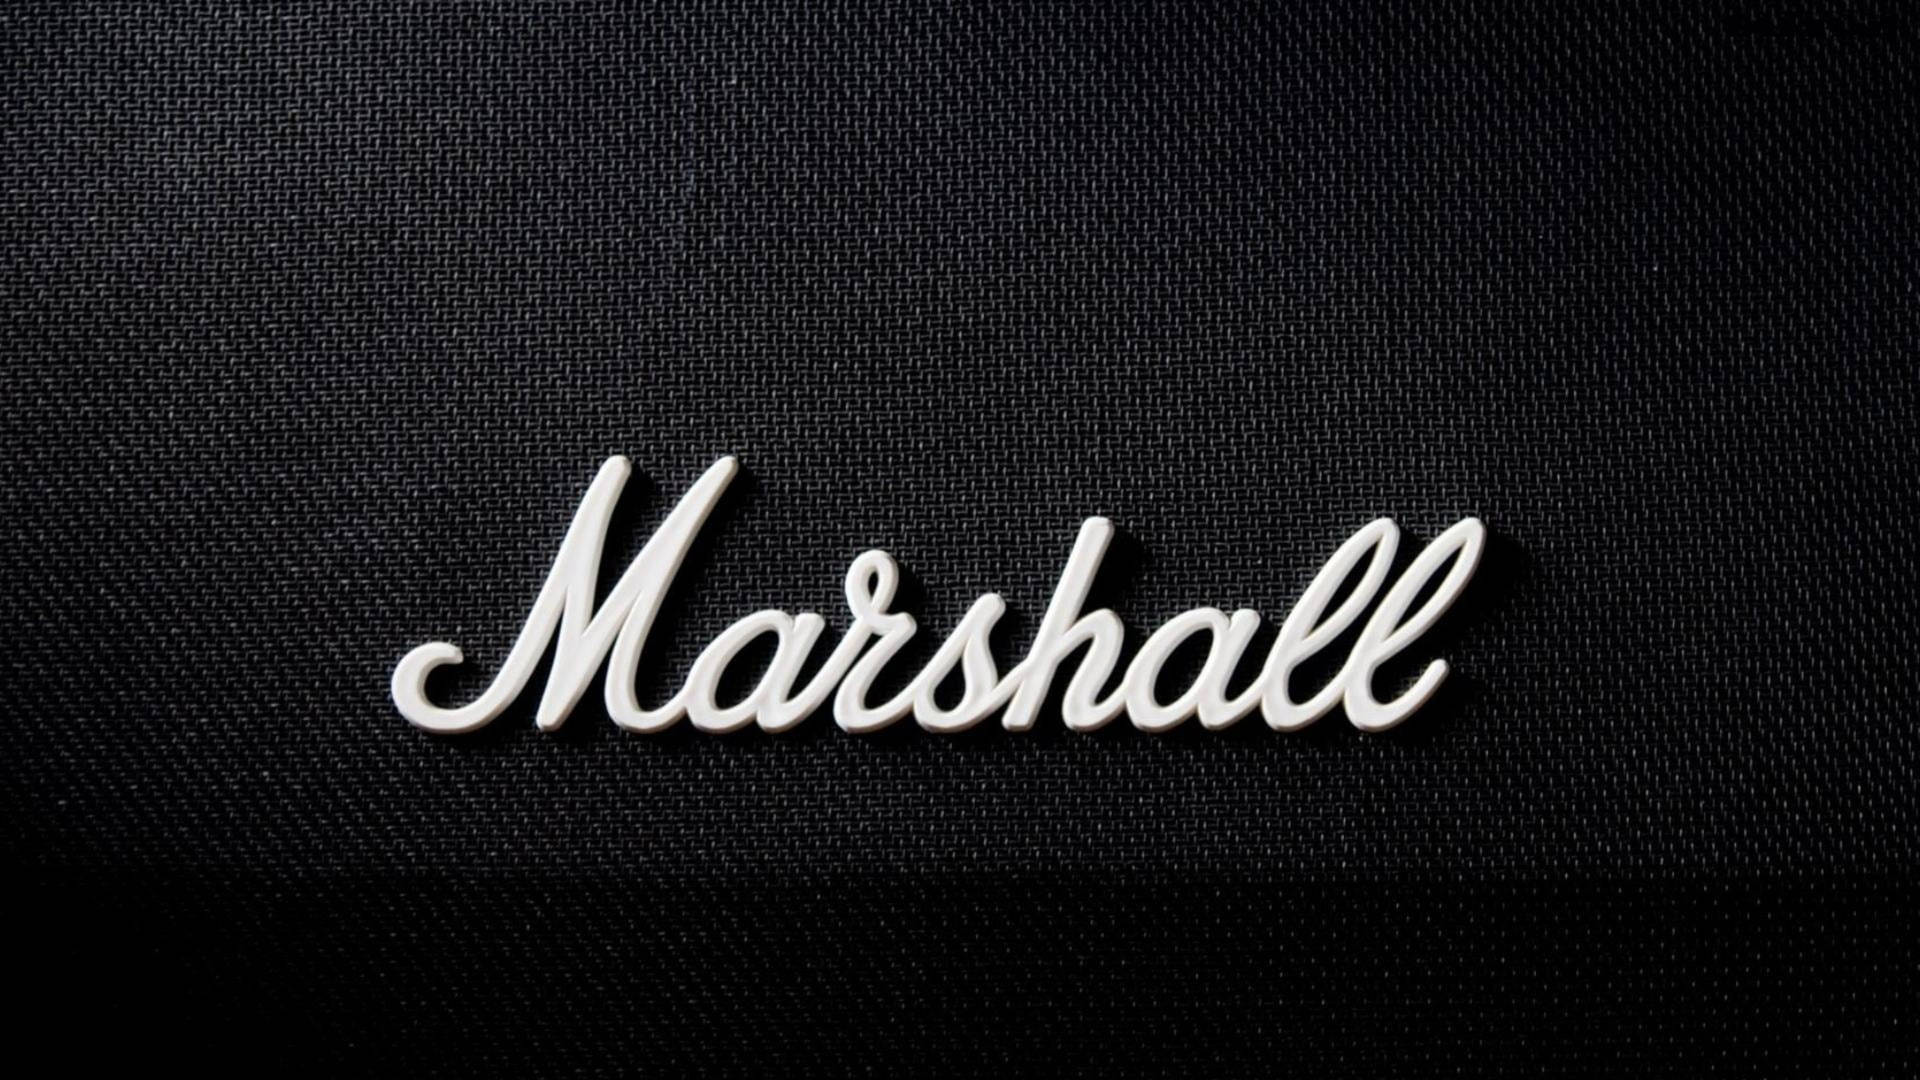 Marshall Logo Black Mesh Screen Background